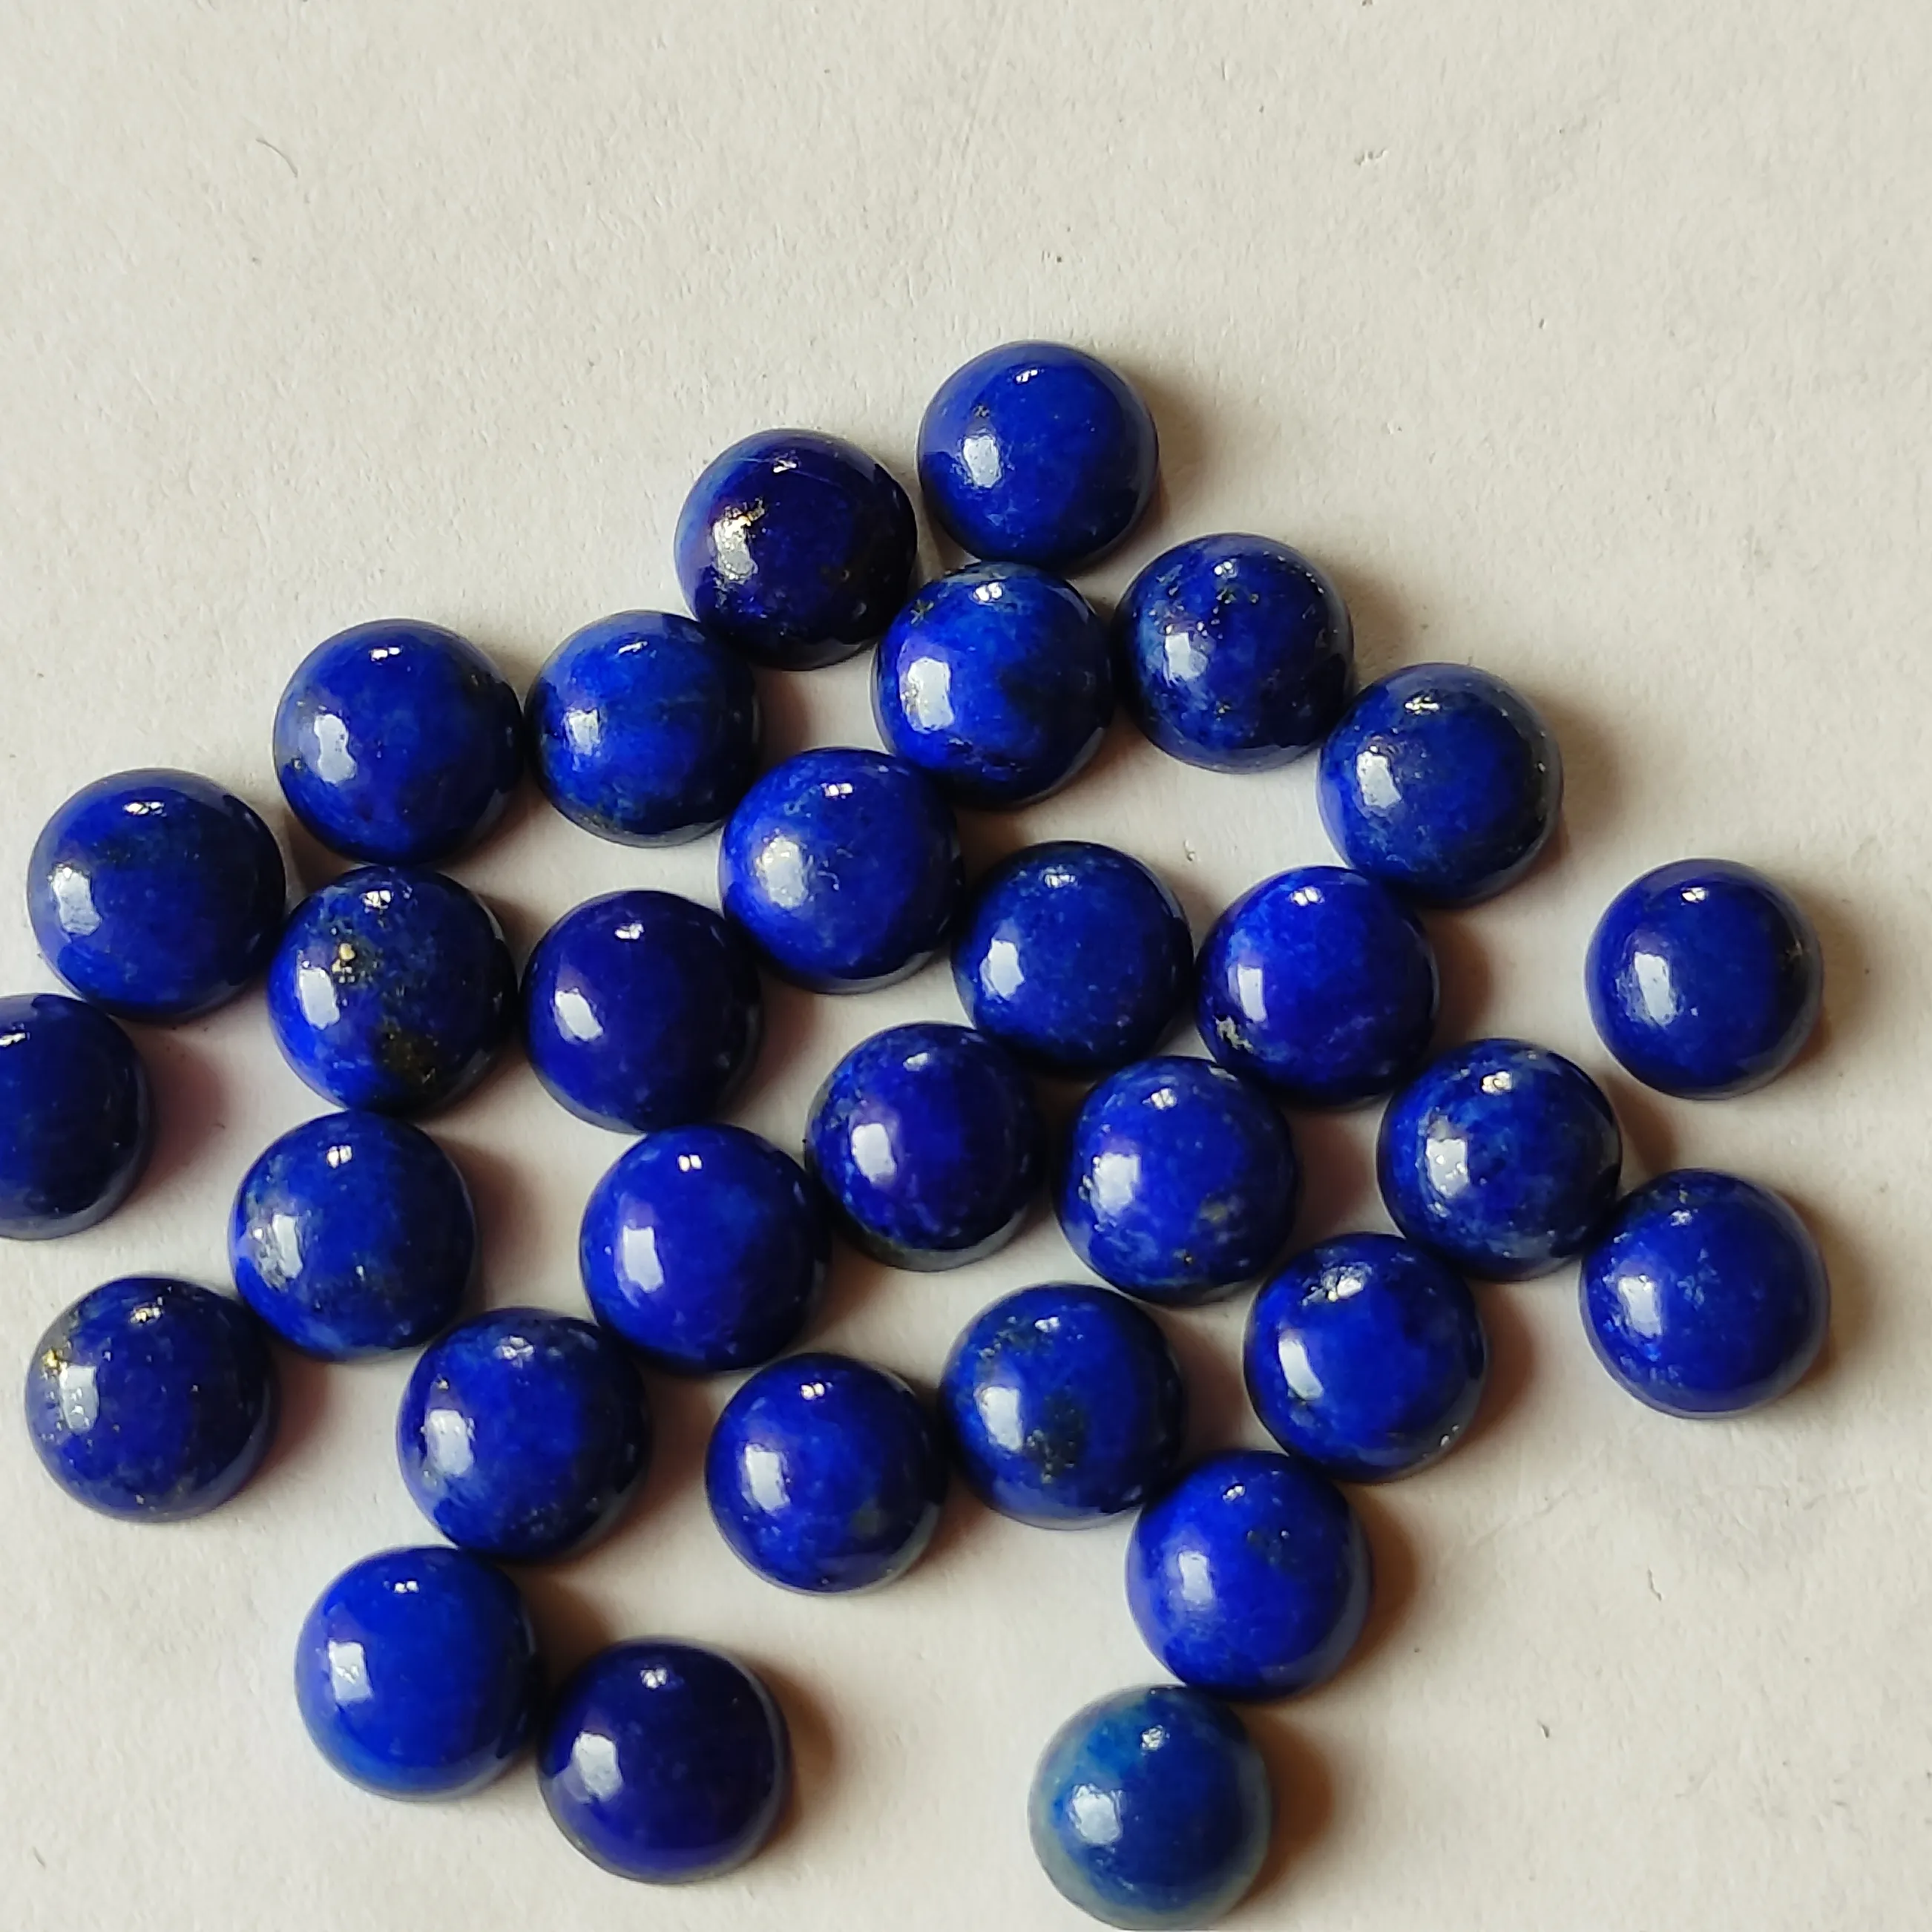 High Quality Blue Lapis Lazuli Gems Loose Wholesale Customizable Size And Shape Cut Cabochon Hexagon Stone Natural Lapis Lazuli